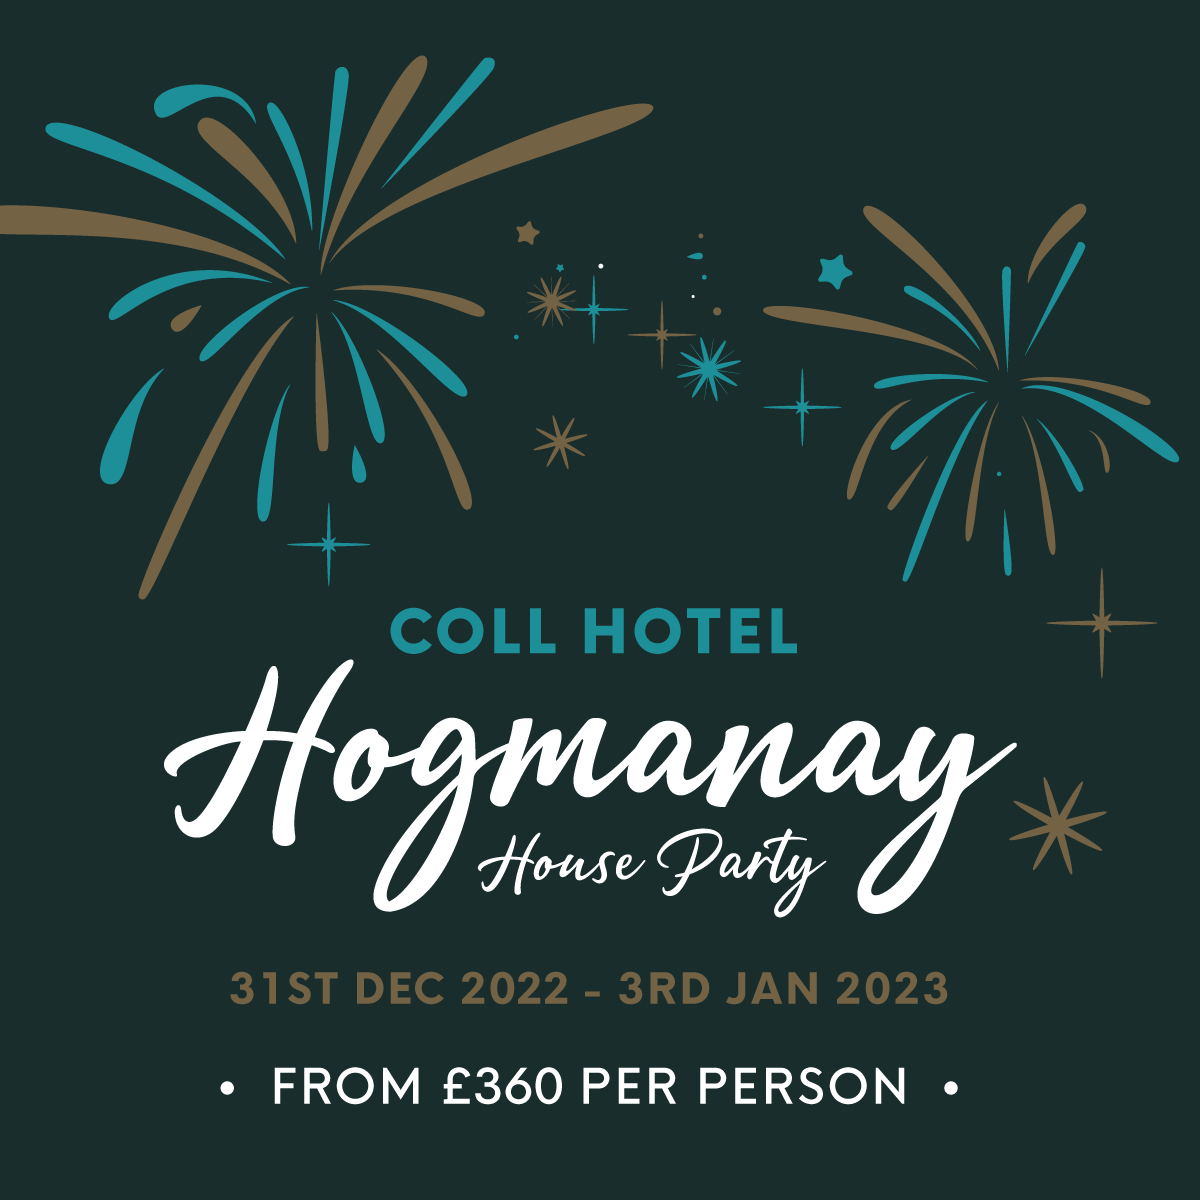 Coll Hotel Hogmanay Break 2022